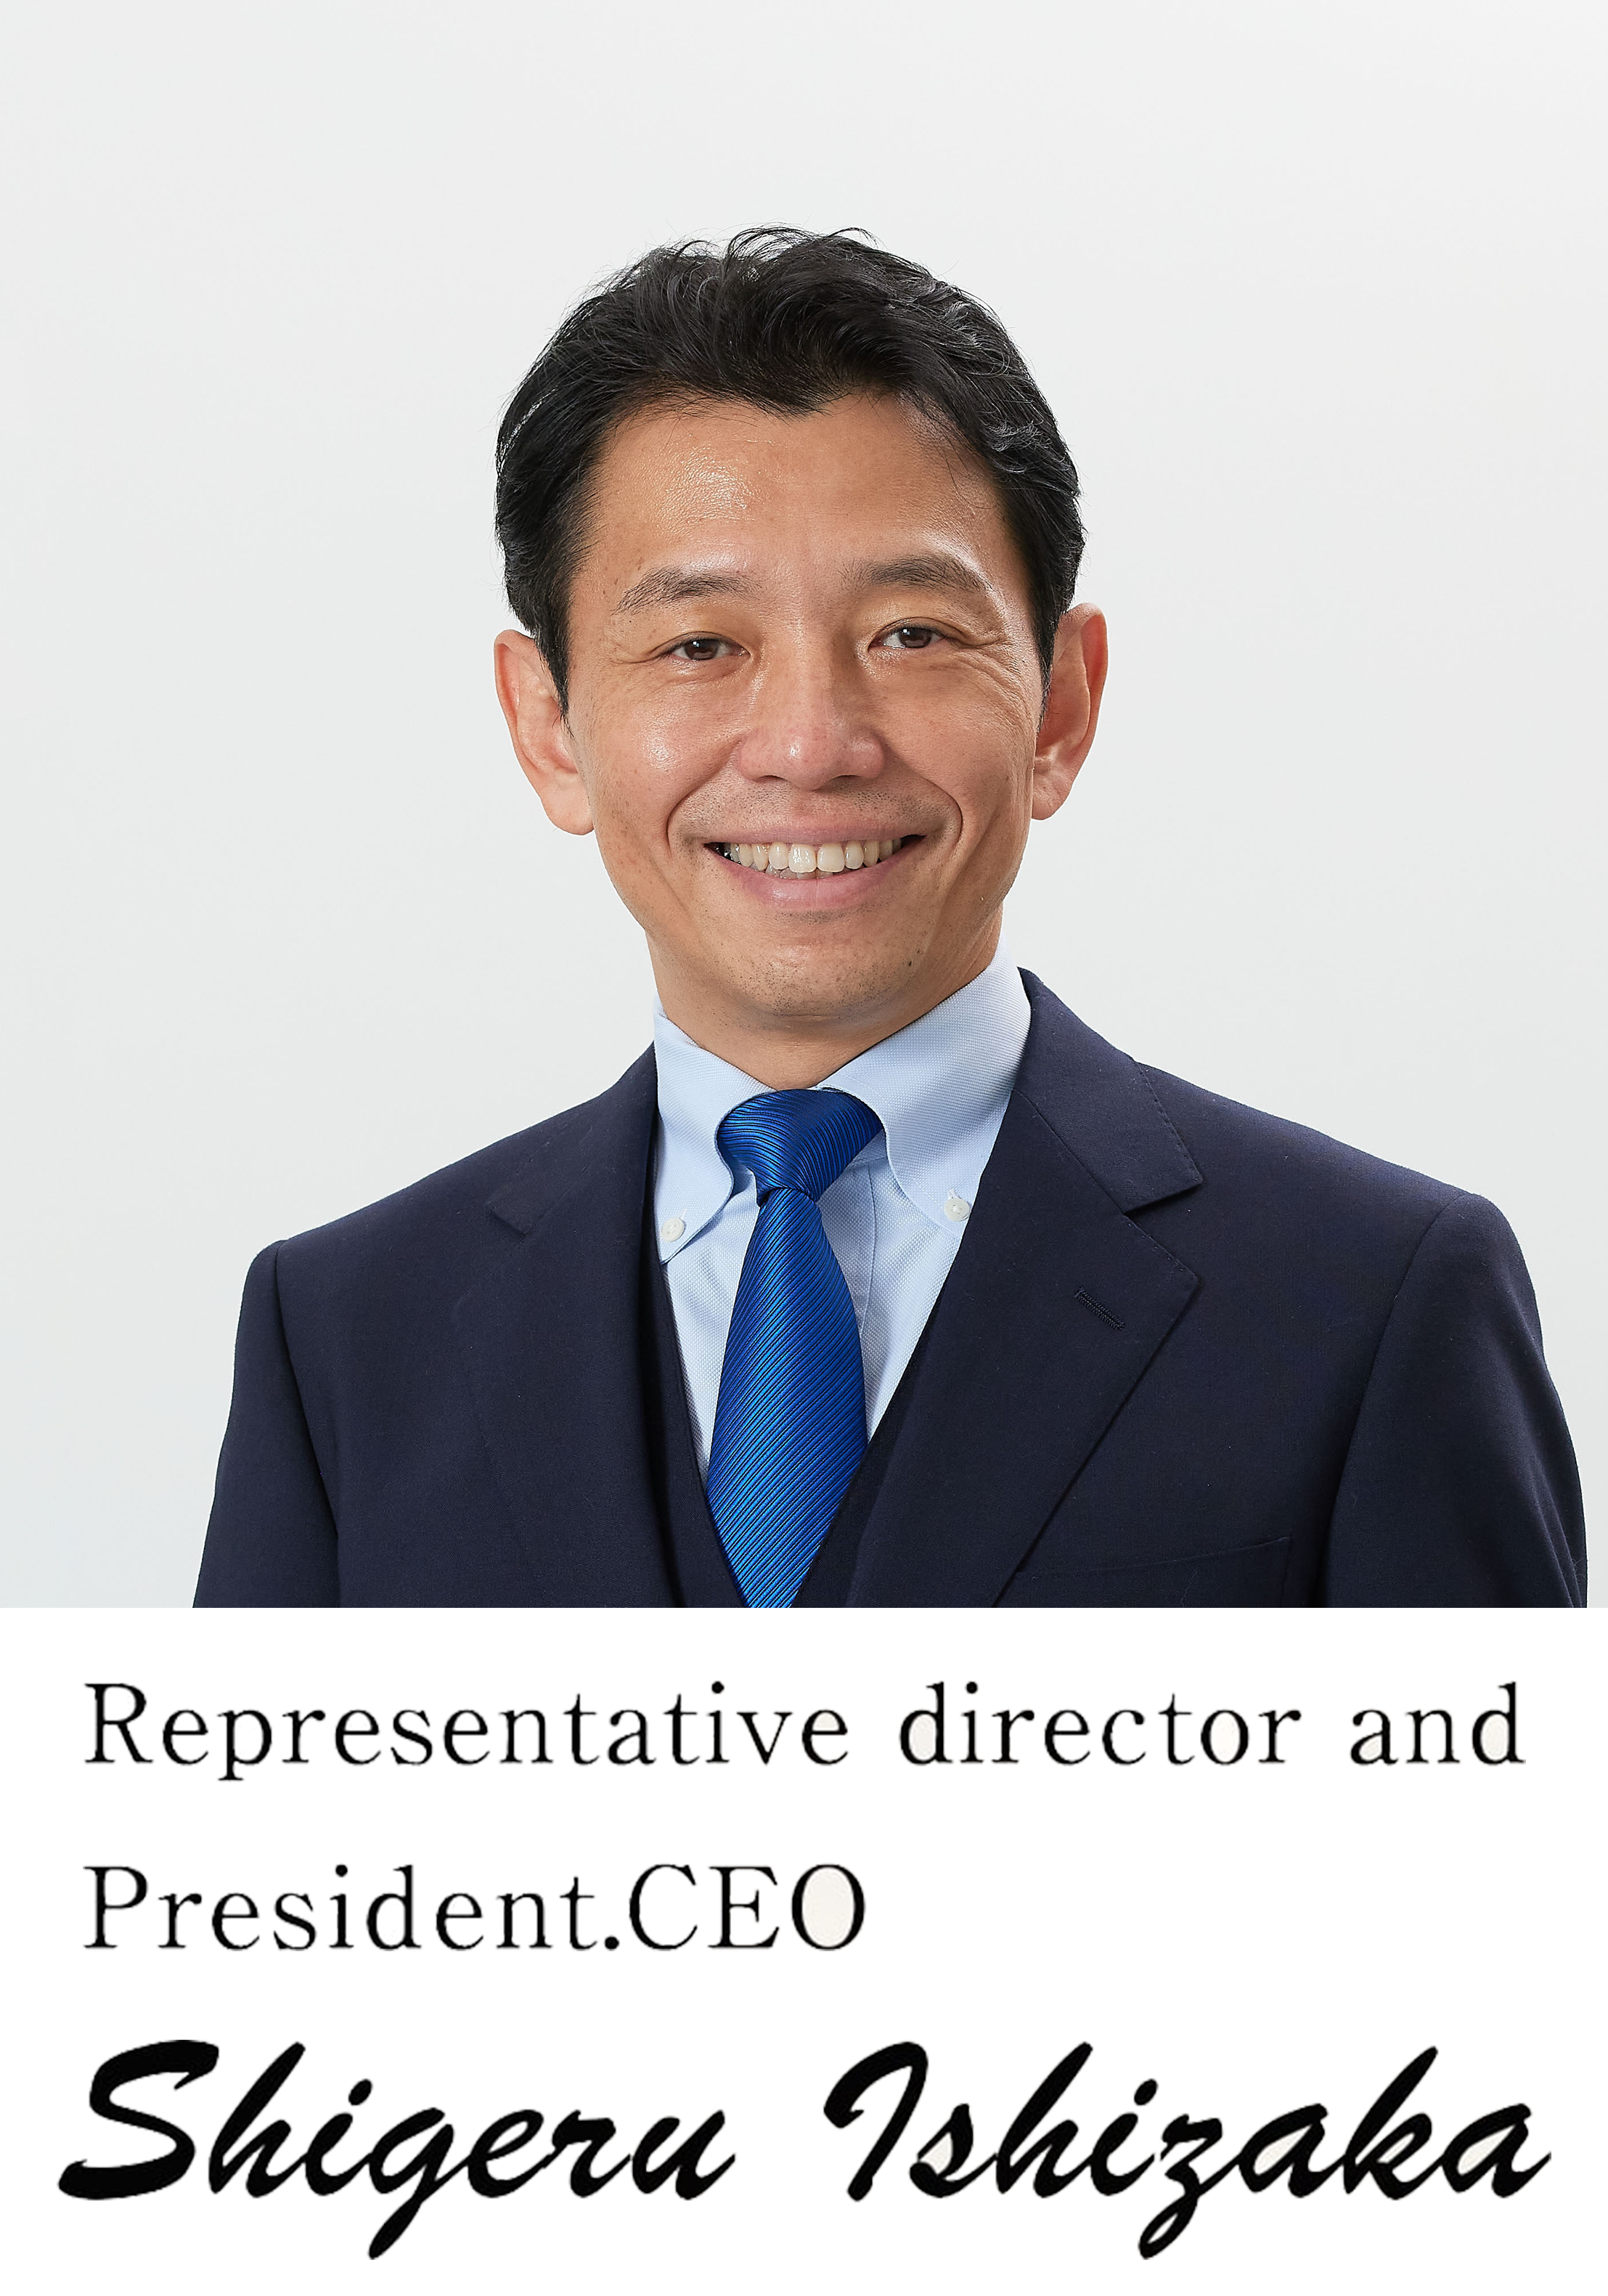 Shigeru Ishizaka, CEO & Representative Director 